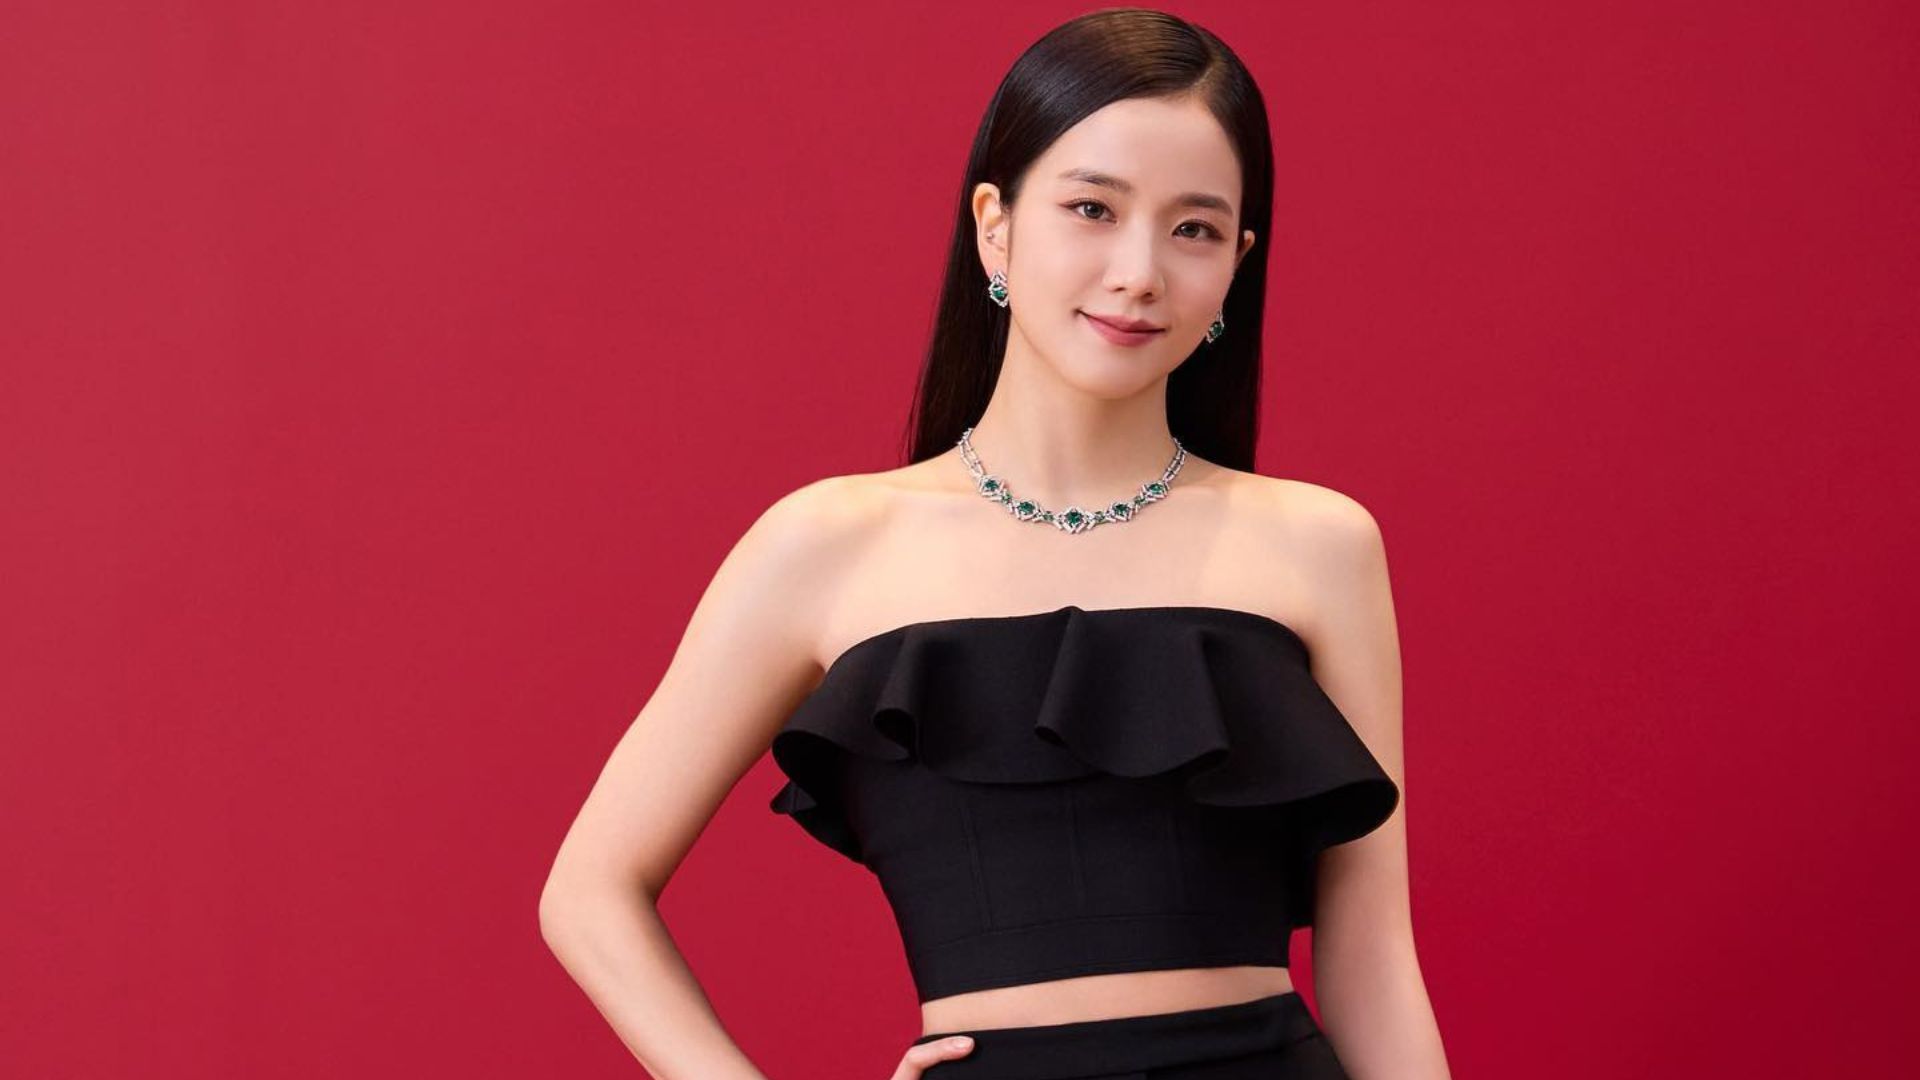 Dior names K-pop star Jimin global brand ambassador - Entertainment - The  Jakarta Post